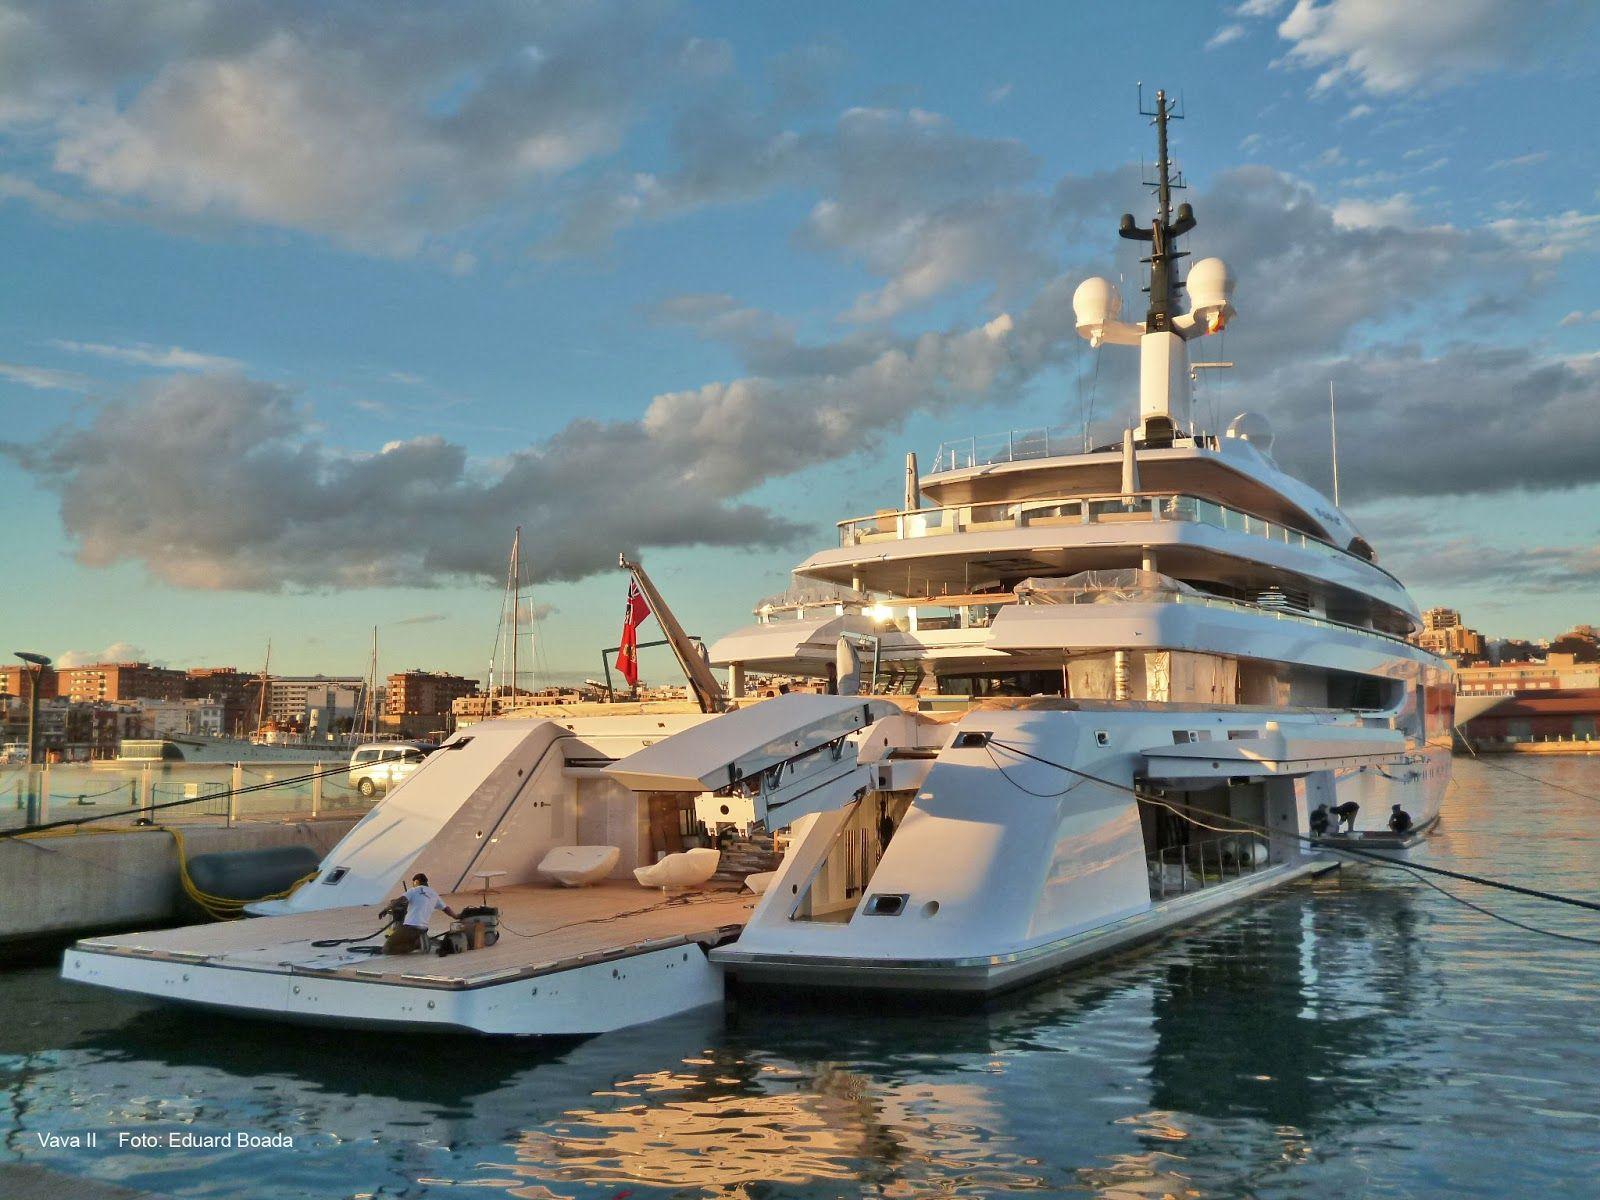 Bertarelli's yacht.